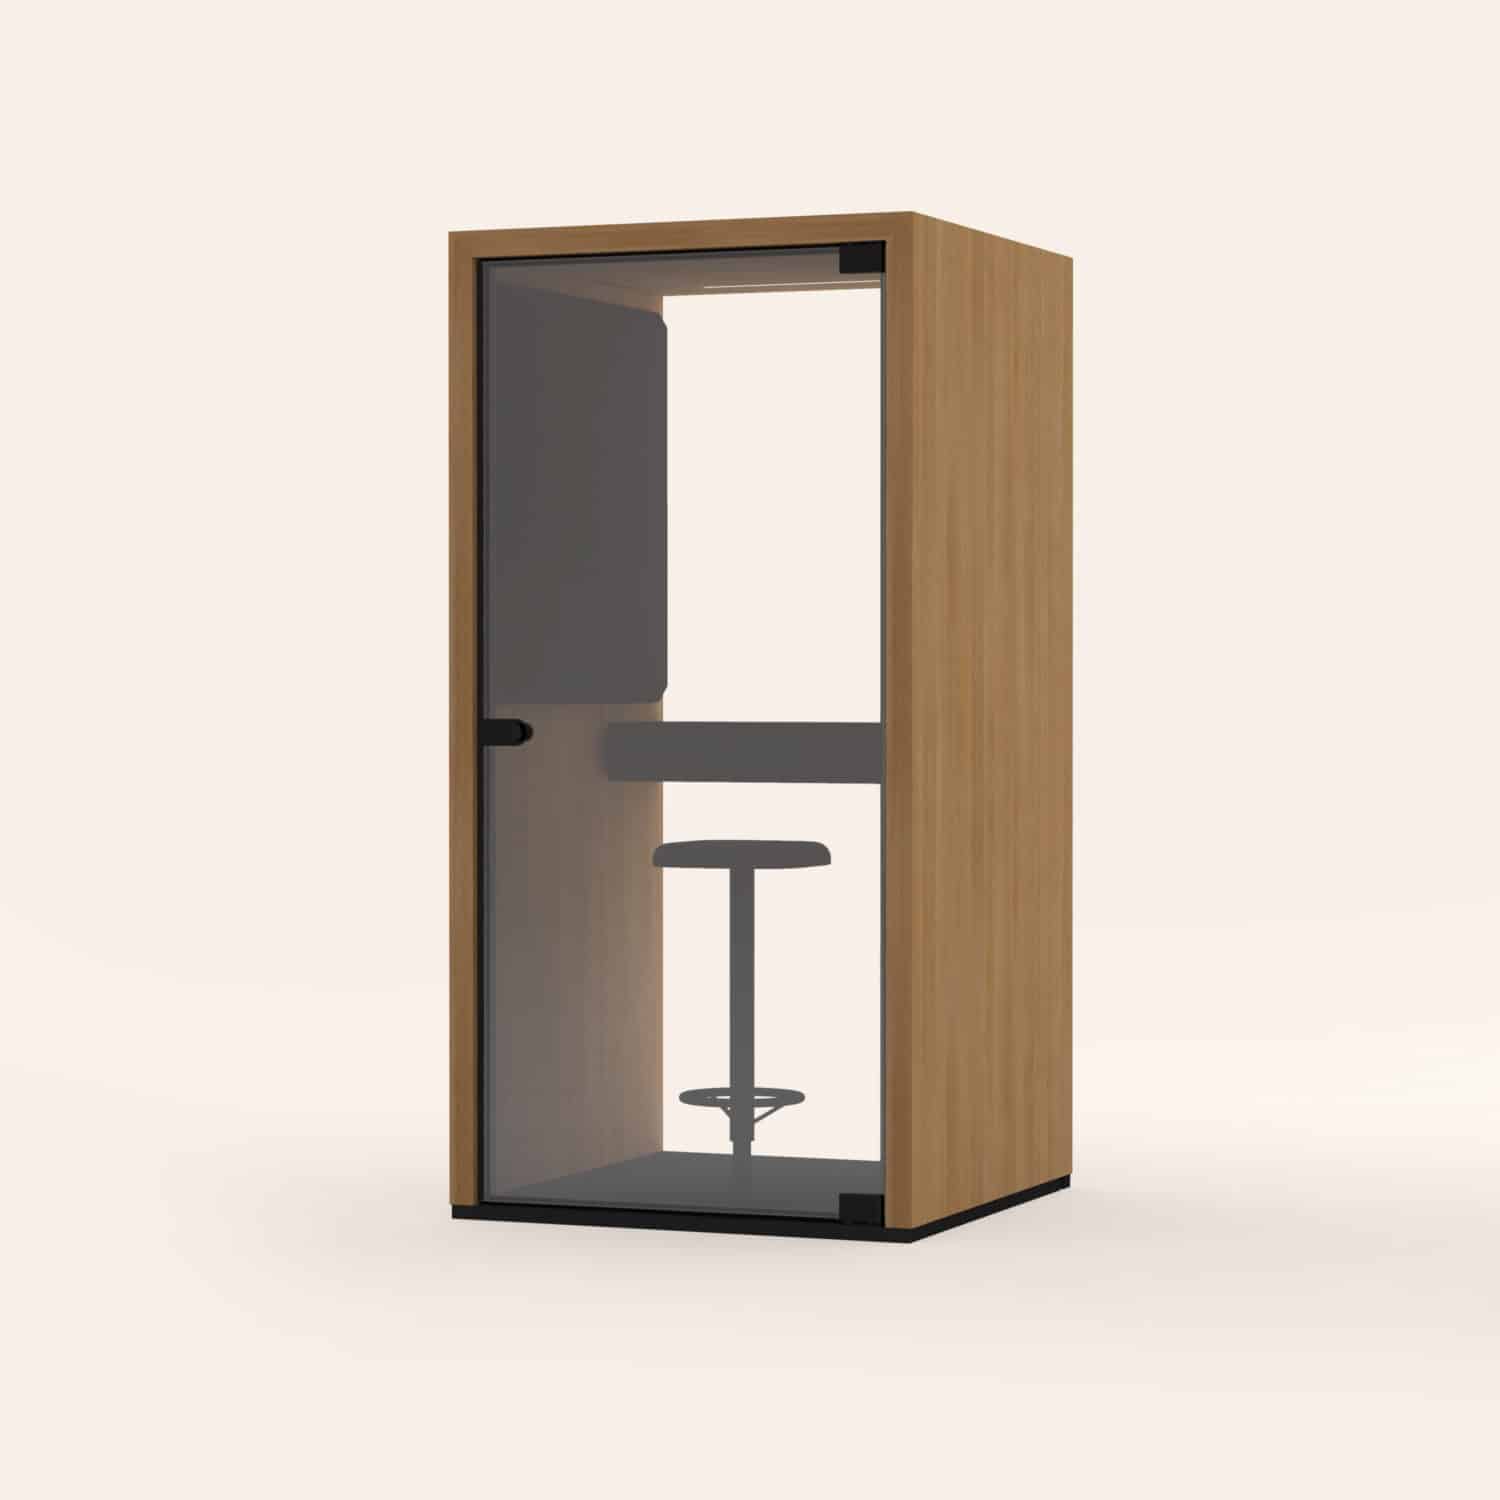 Taiga-Concept-Lohko-Box-1-image-5-2-scaled